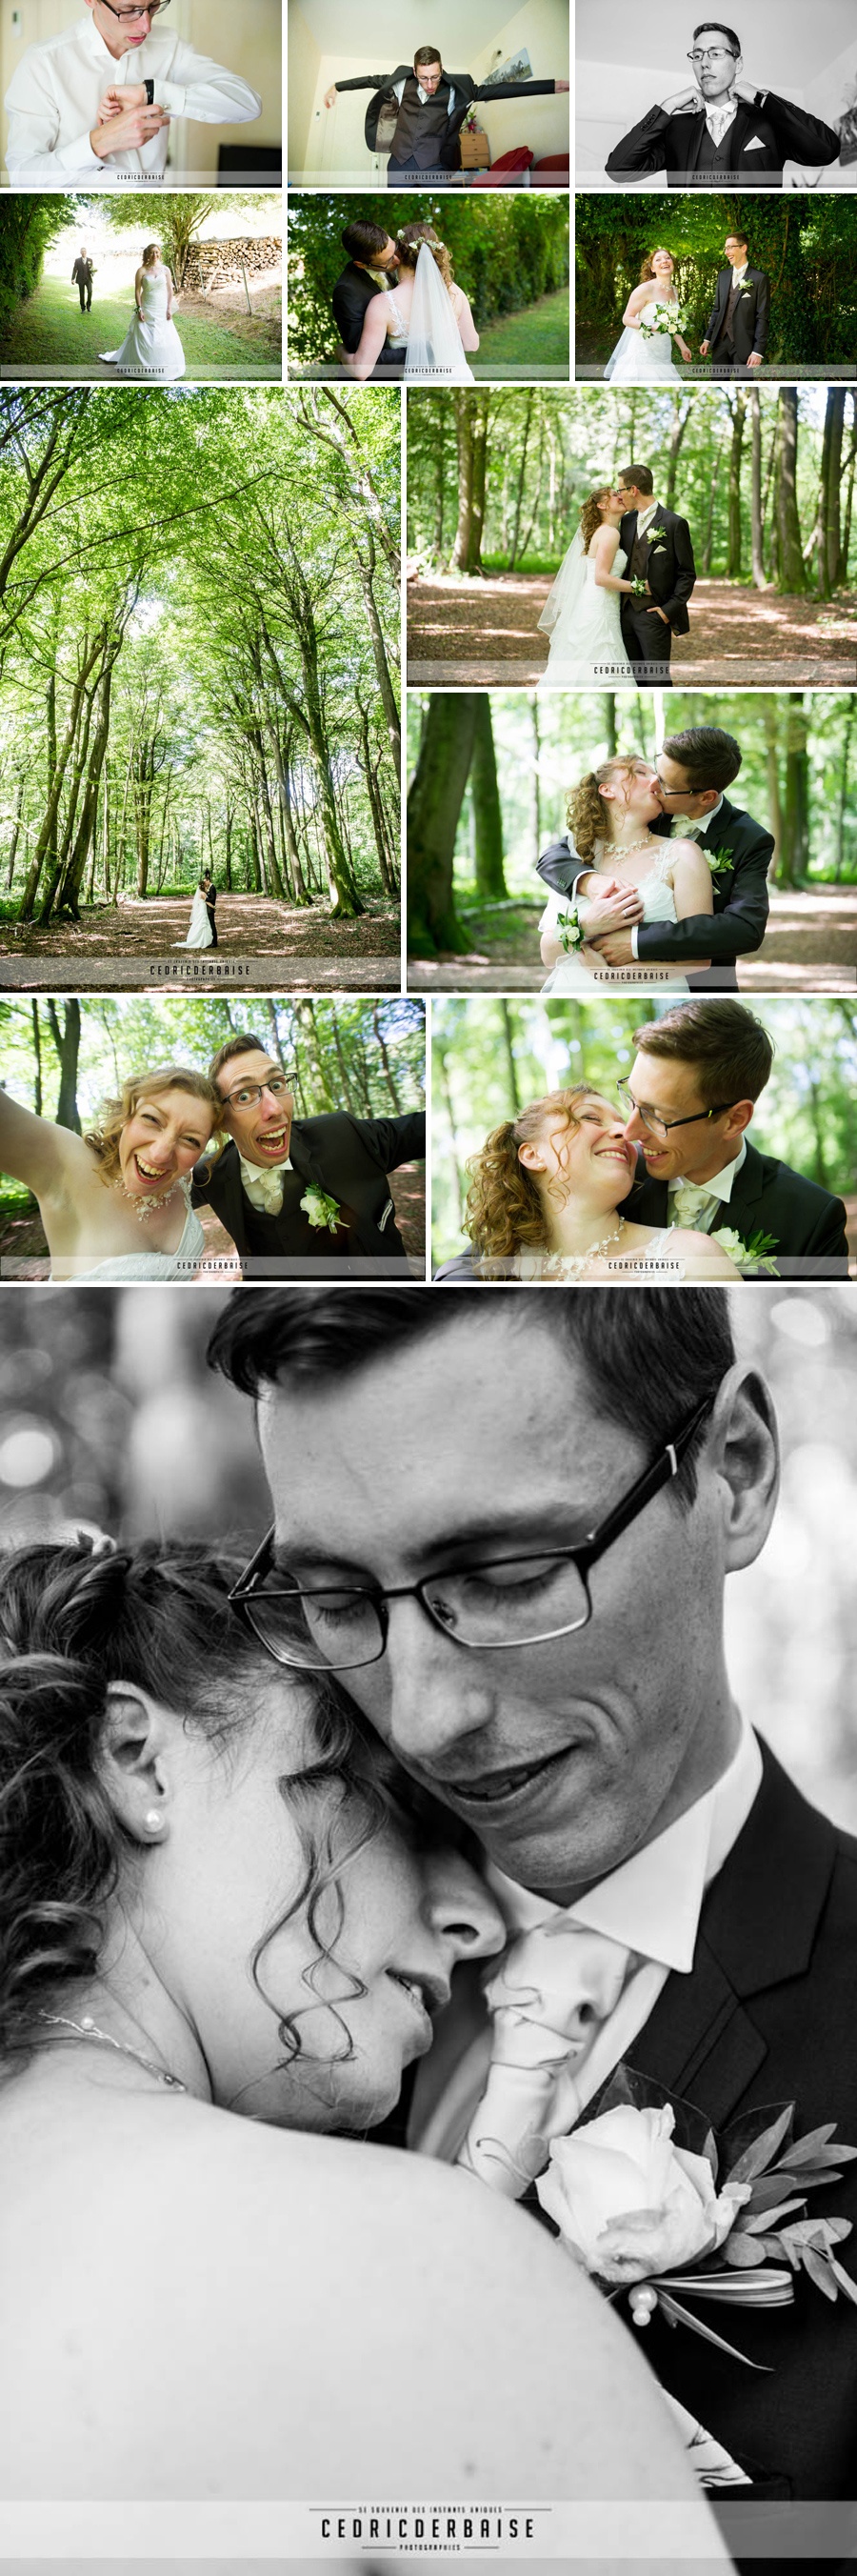 Photographe mariage beauvais-photo-de-couple-mariés